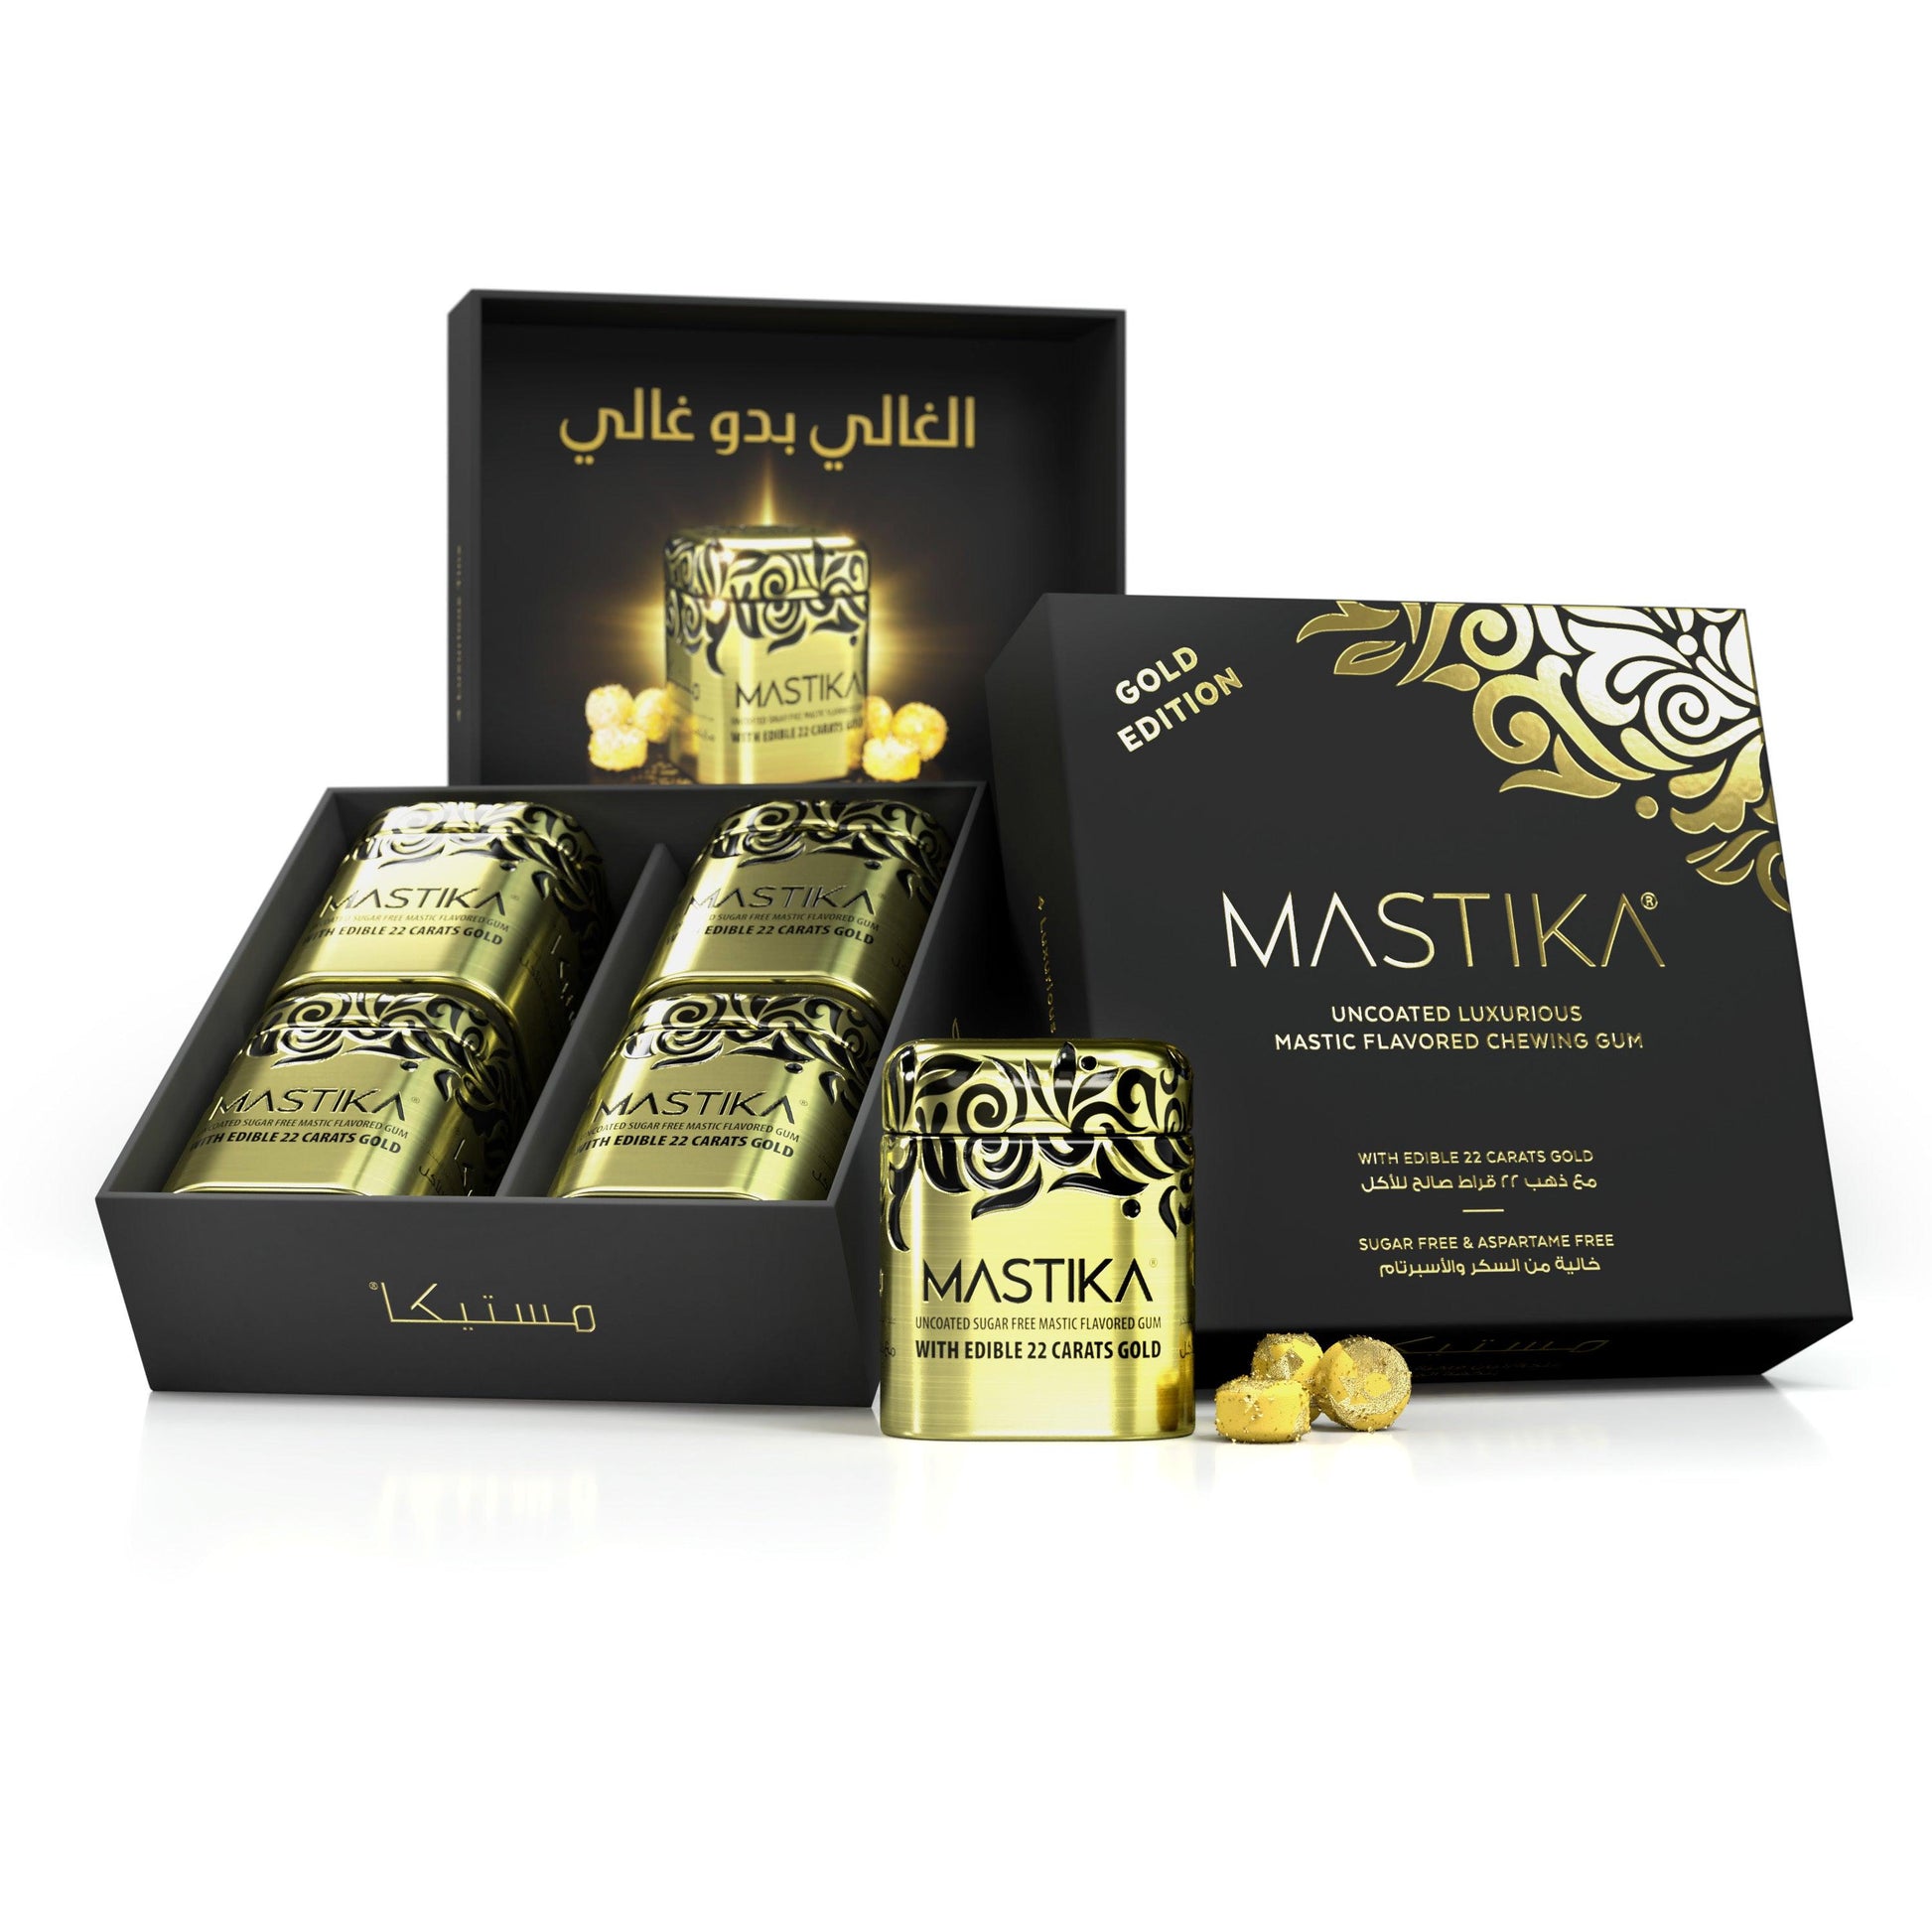 MASTIKA GUM GOLD - NATURAL PREMIUM MASTIC FLAVORED CHEWING GUM WITH EDIBLE GOLD